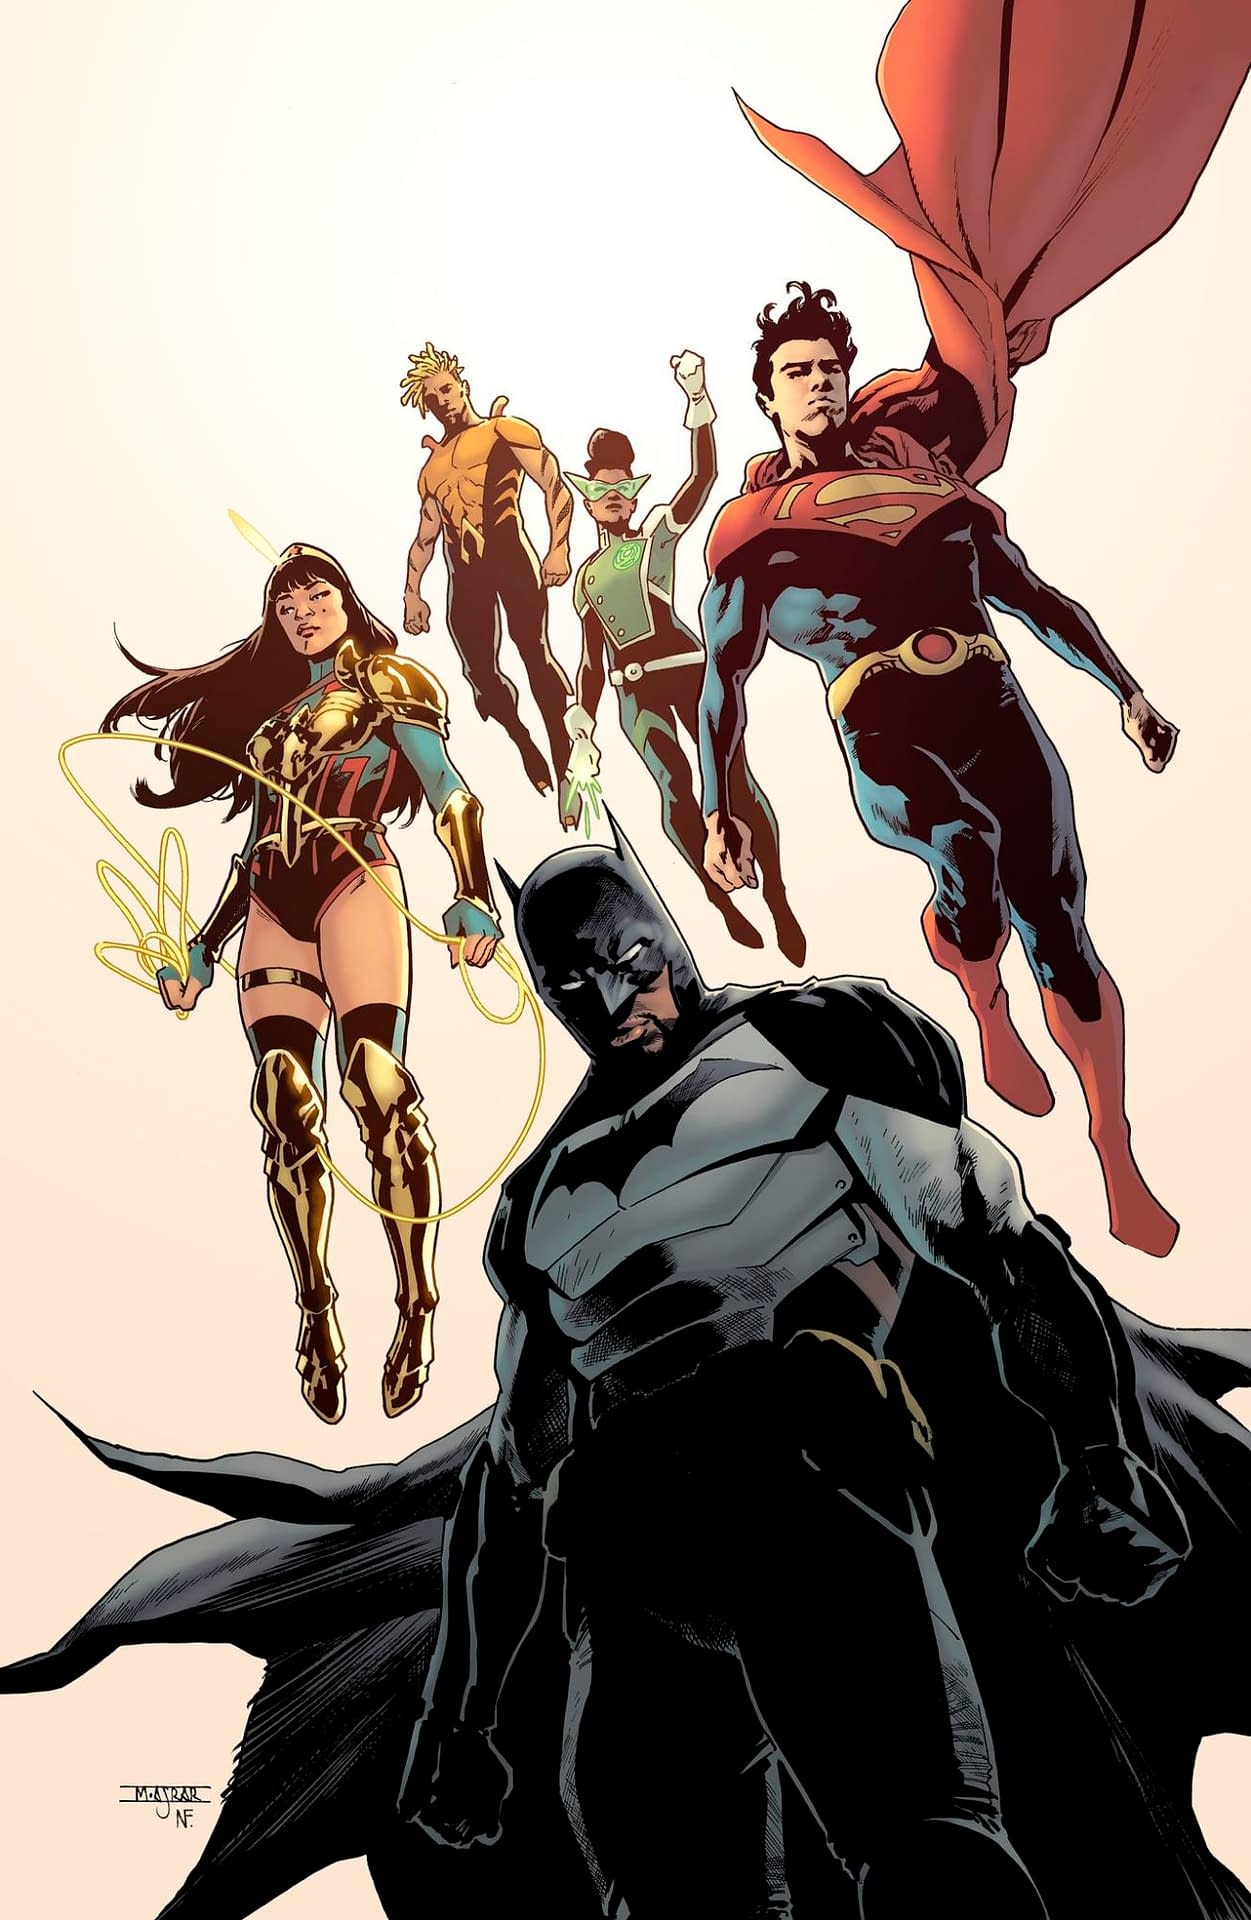 A New Justice League, For DC Comics' Dark Crisis